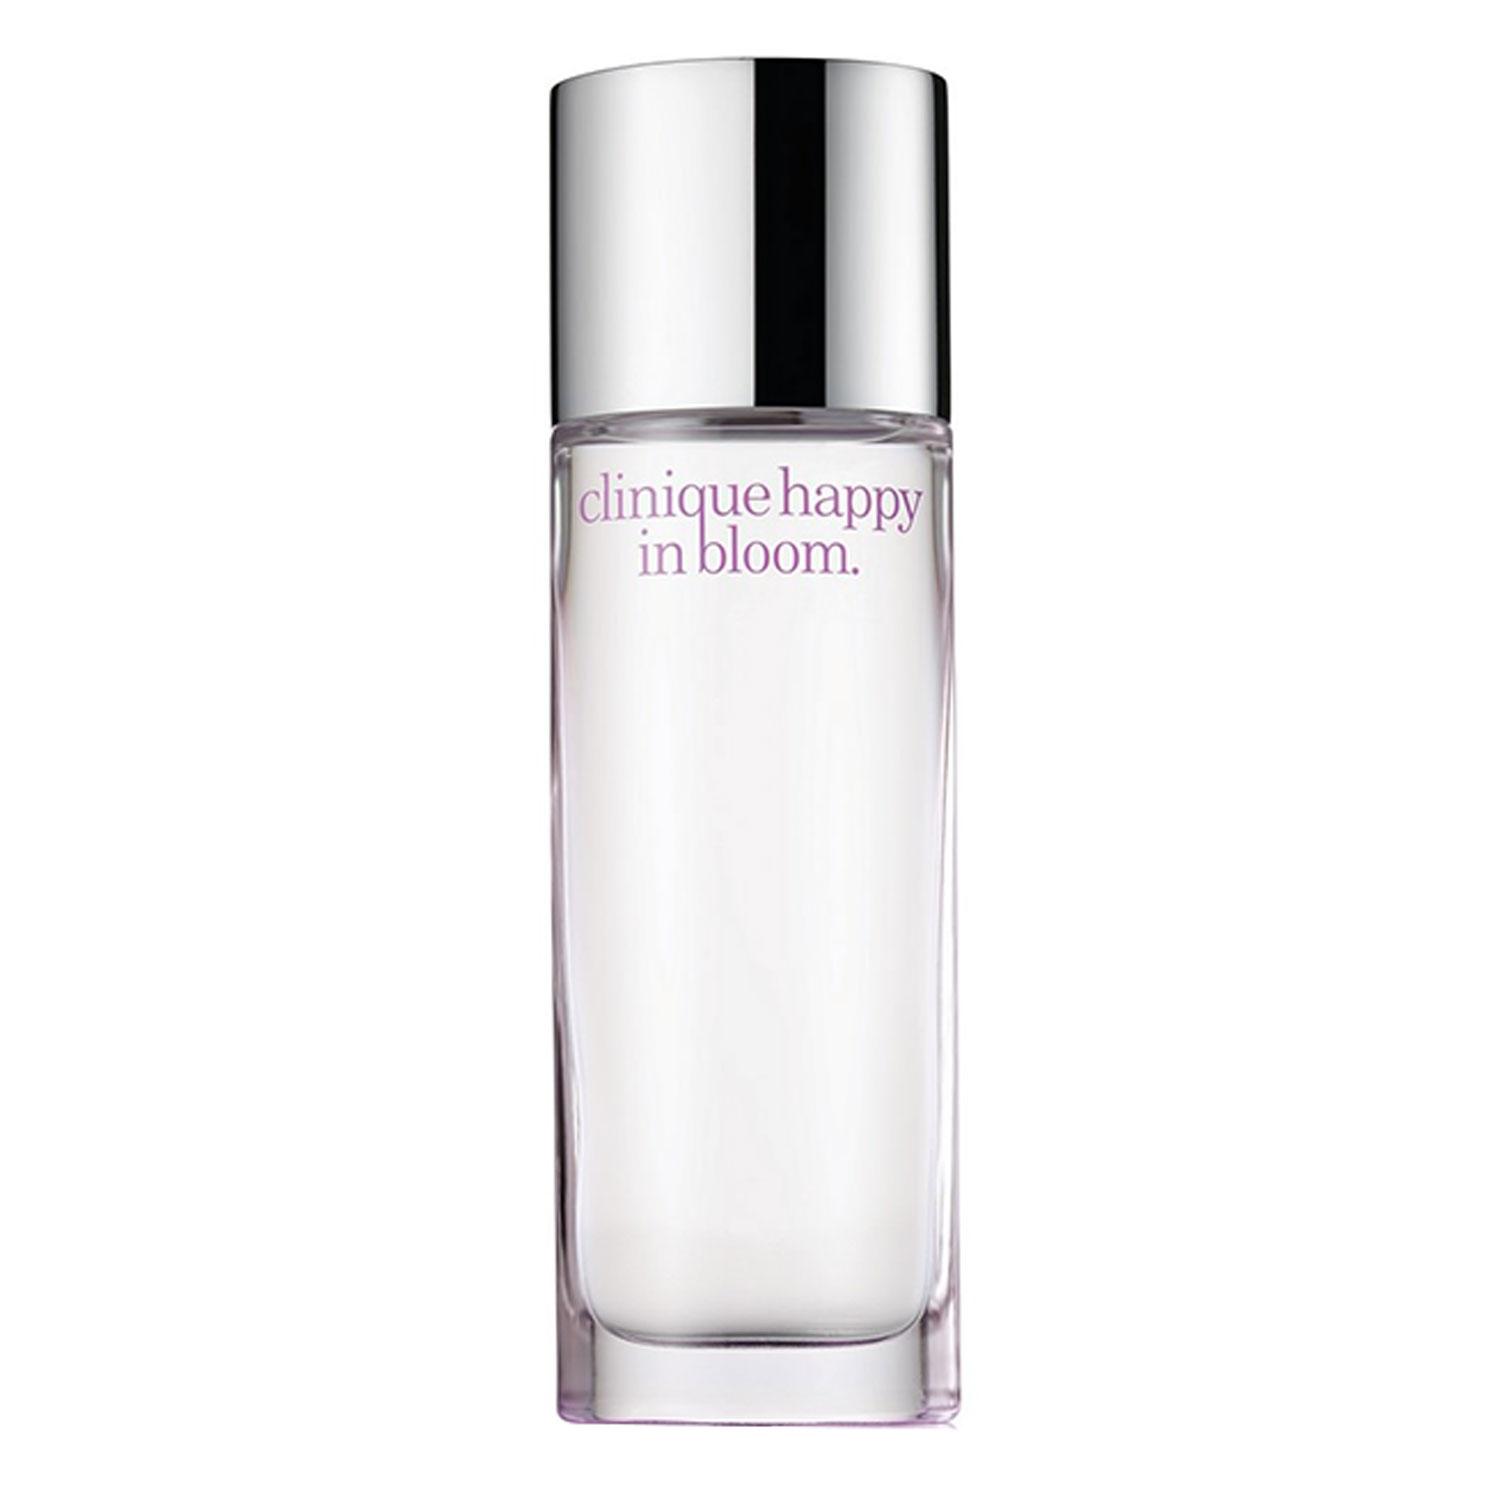 Clinique Happy - In Bloom Perfume Spray